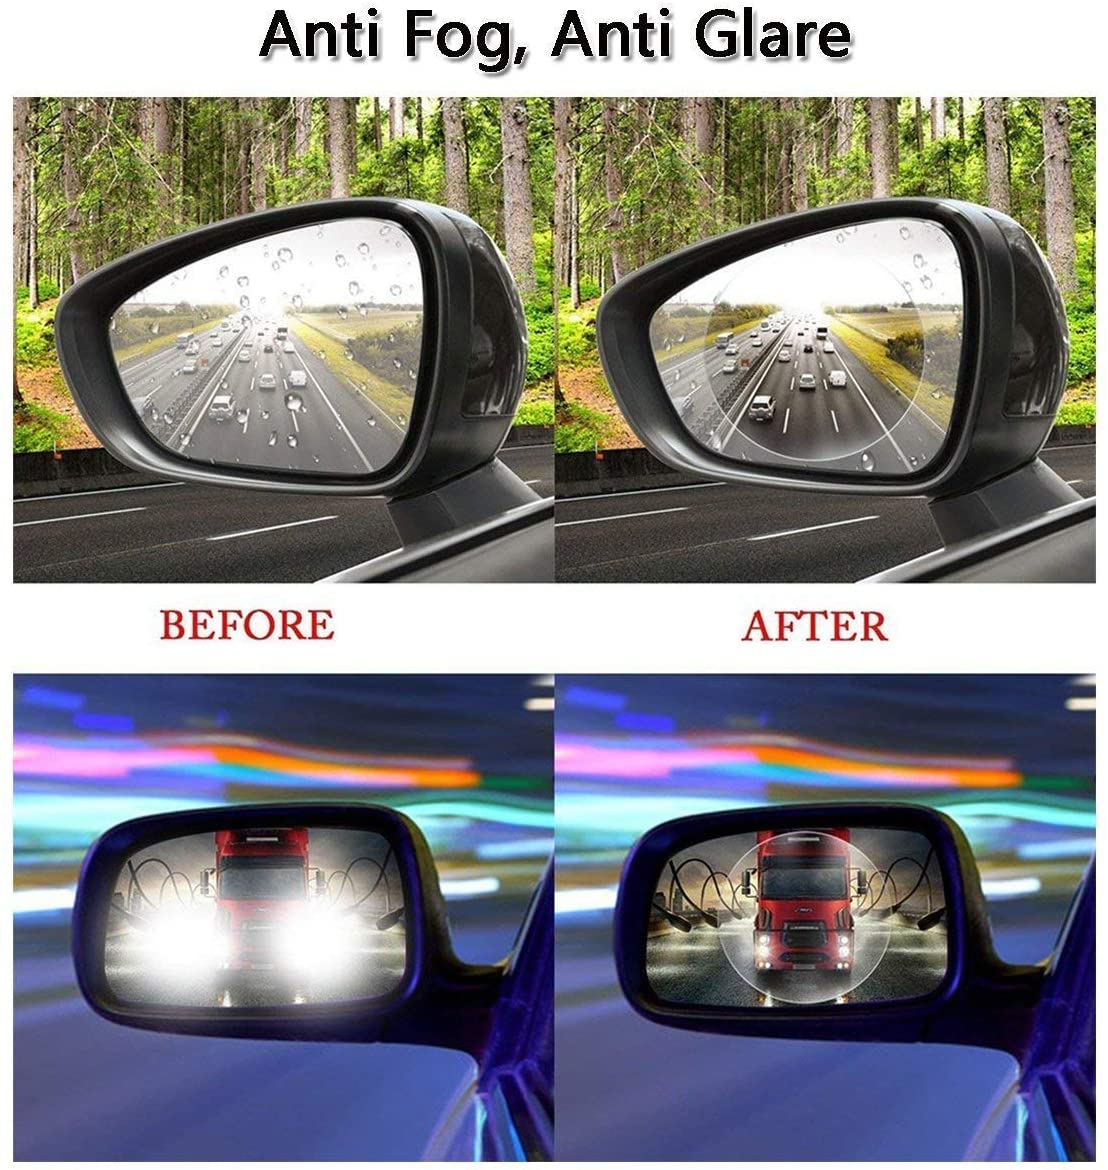 Naisidier 2 Pcs Car Rearview Mirror Rainproof Film Anti Fog Protective Membrane Waterproof Anti Glare PET Film for Car 100mm Round Automotive Car Accessories 